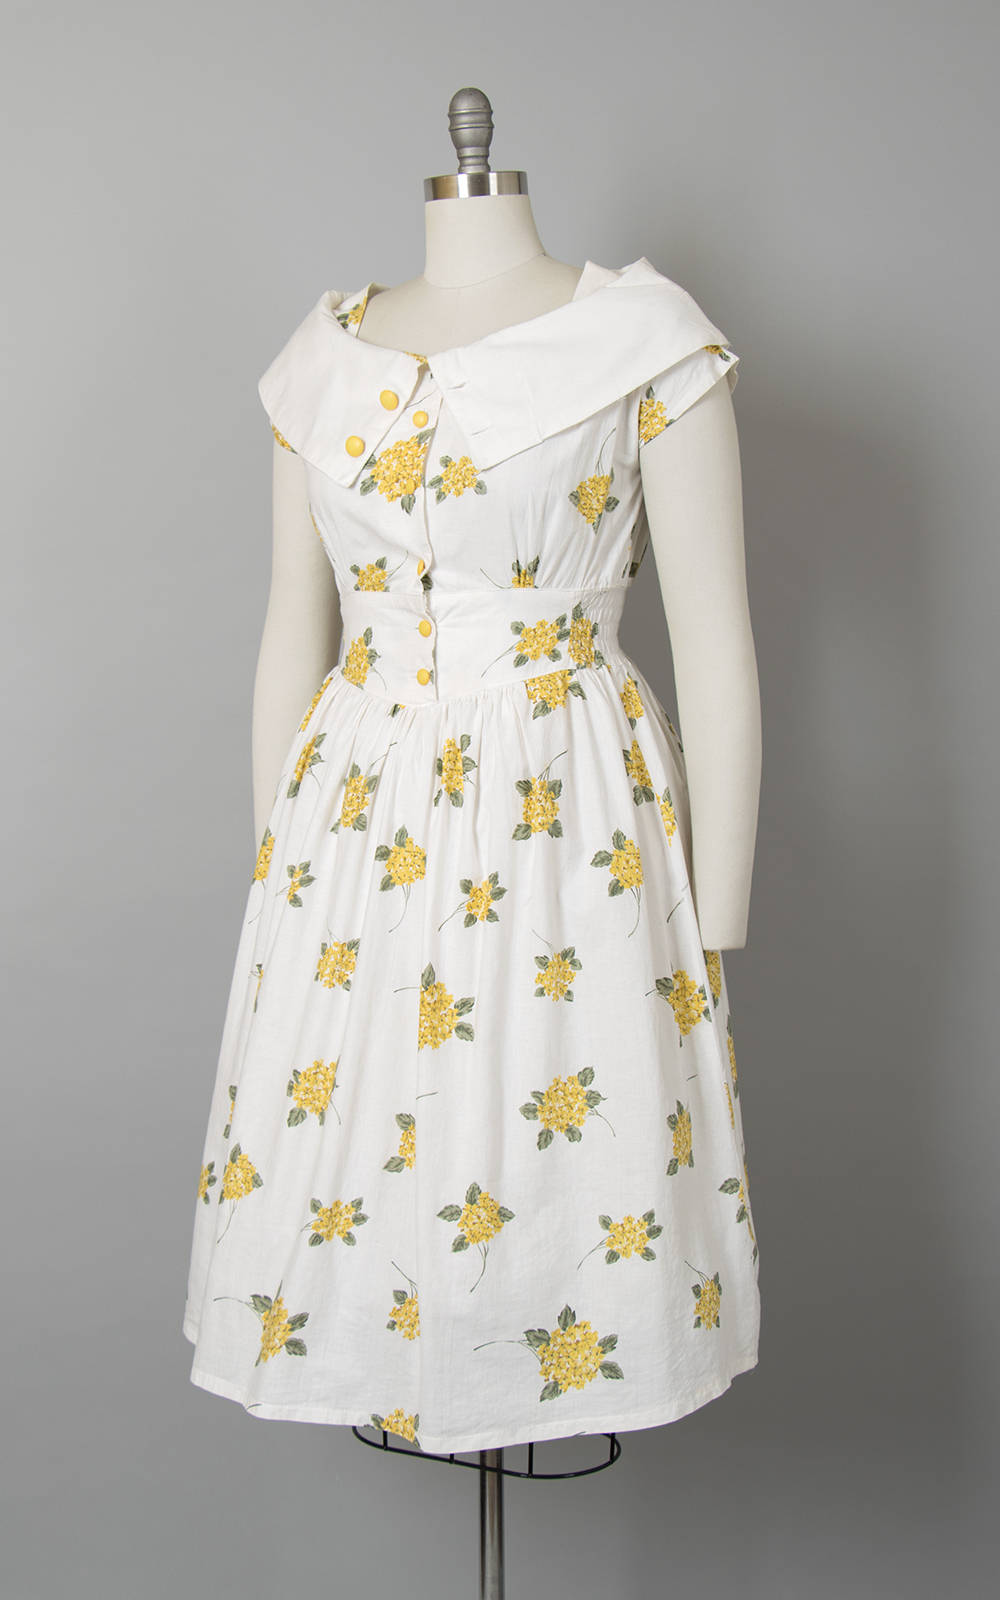 Vintage 1950s Style Dress | 50s Floral Cotton Sundress White Yellow Shirtwaist Day Dress (small/medium)